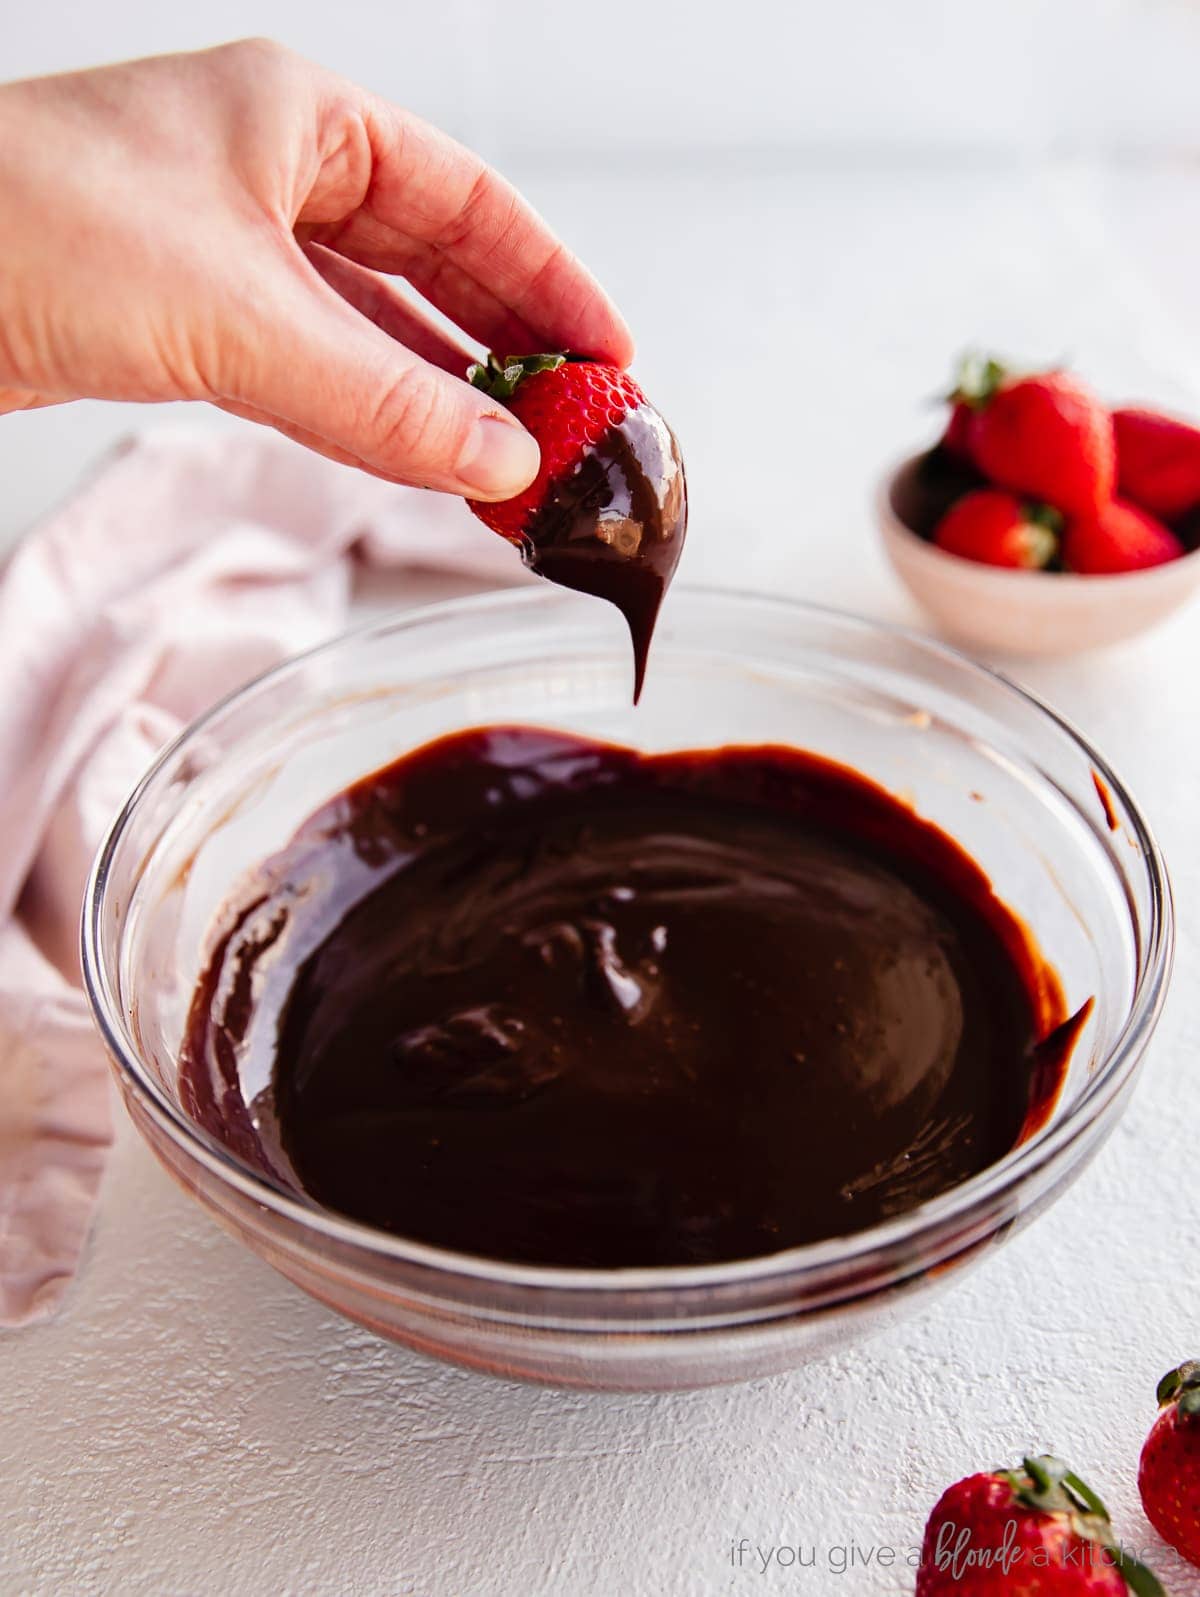 hand holding strawberru covered in chocolate ganache of bowl of chocolate ganache